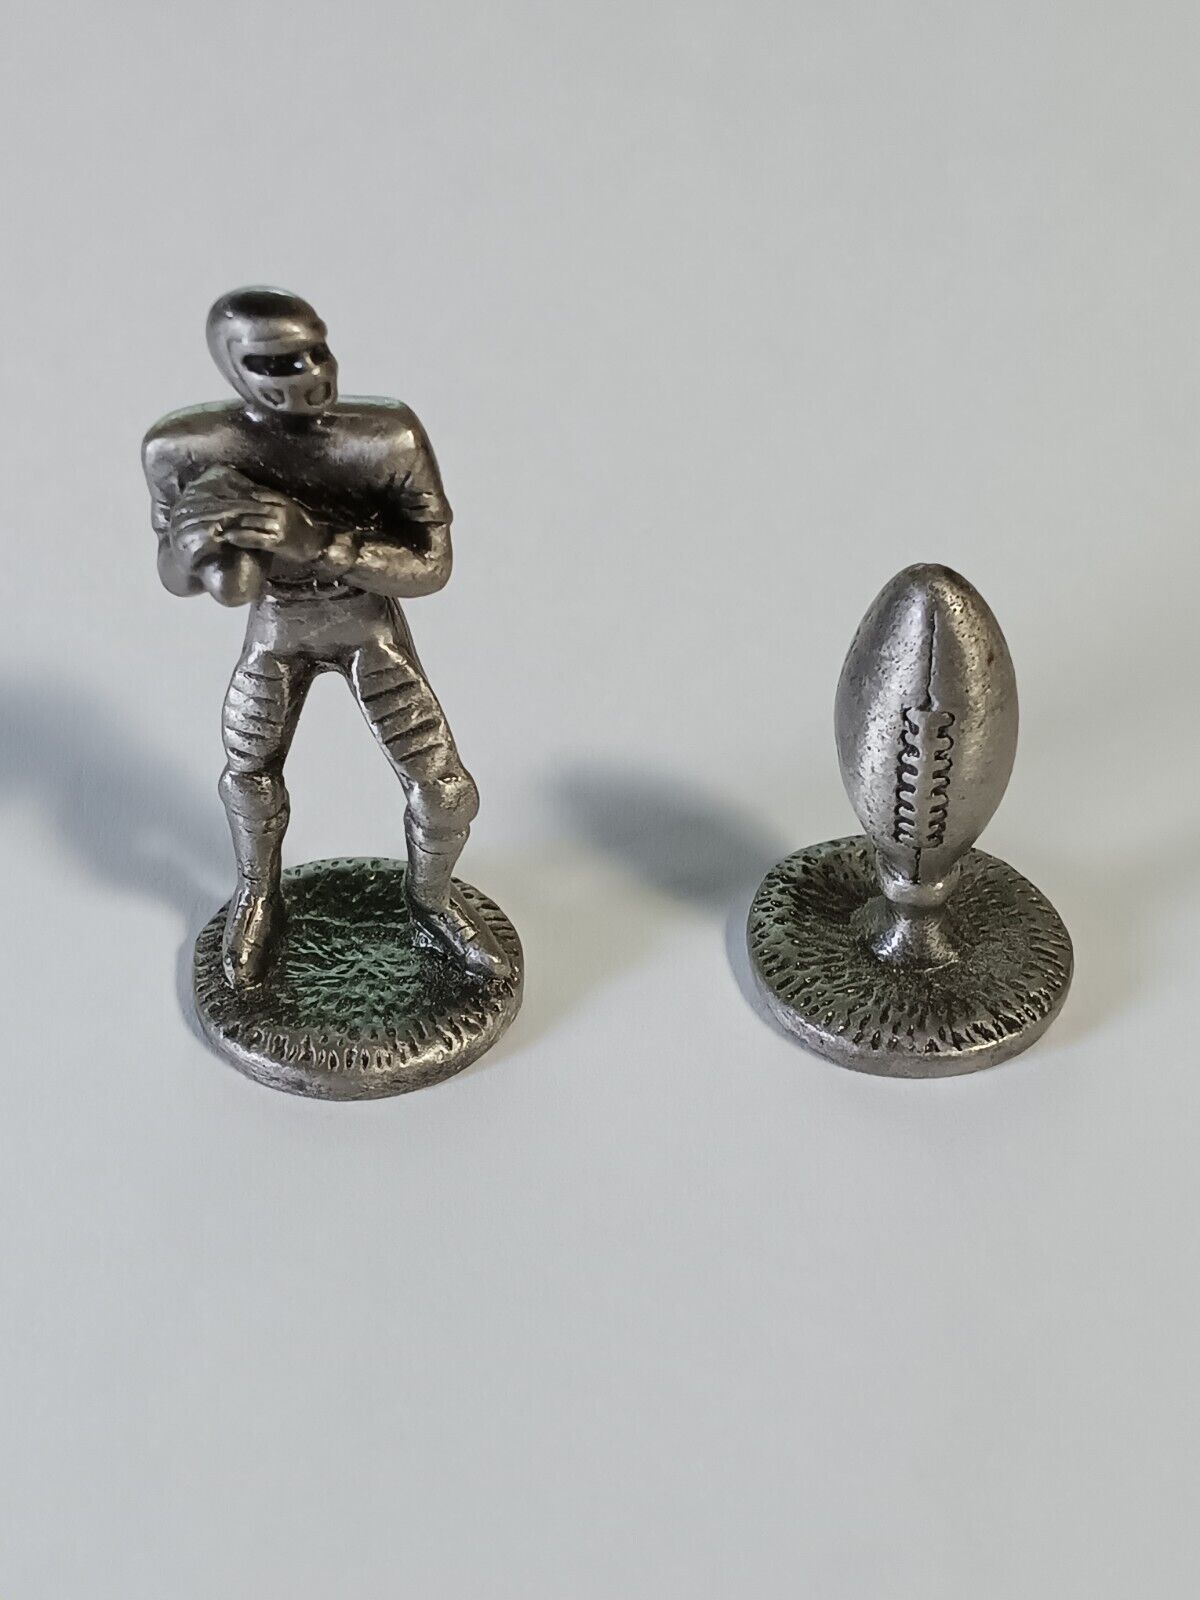 Vintage Pewter Football Player & Football Figurine Mini Figures Paper Weight